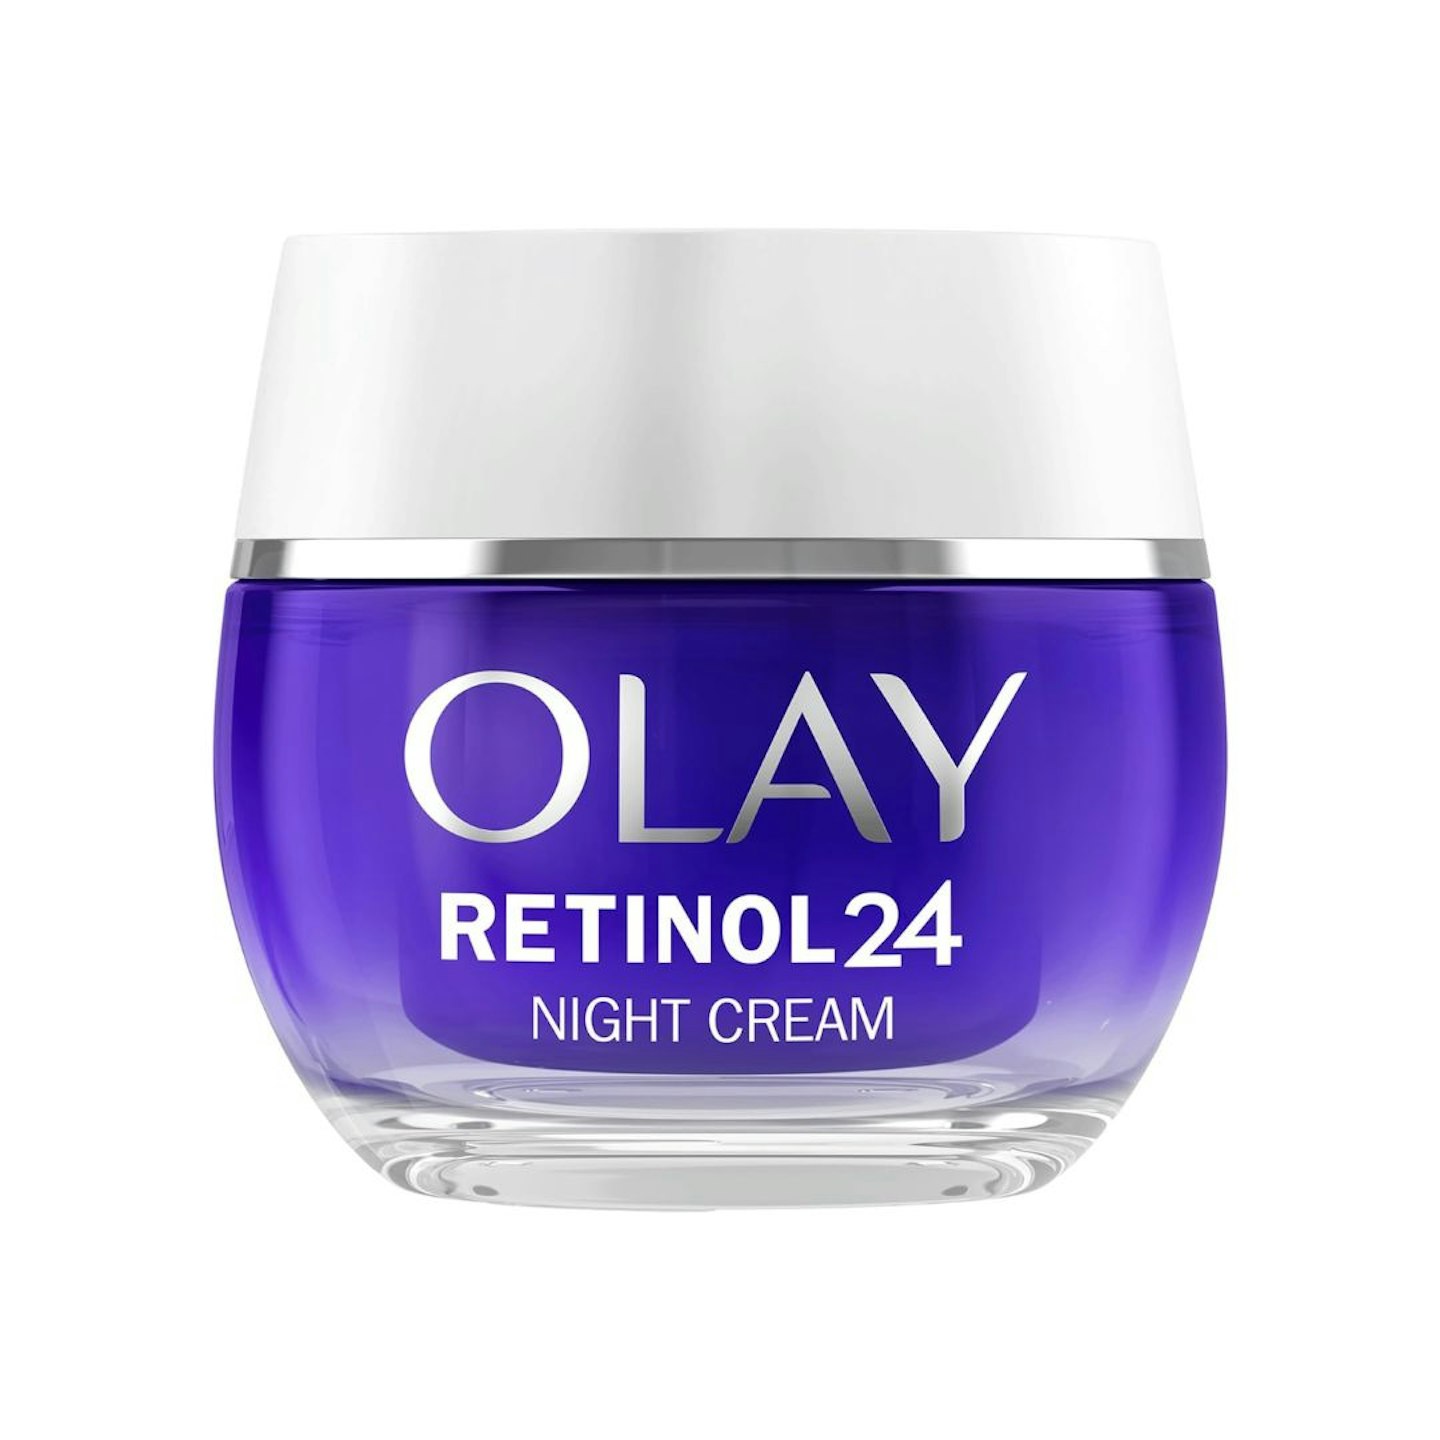 Olay Retinol 24 Night Cream Face Moisturiser